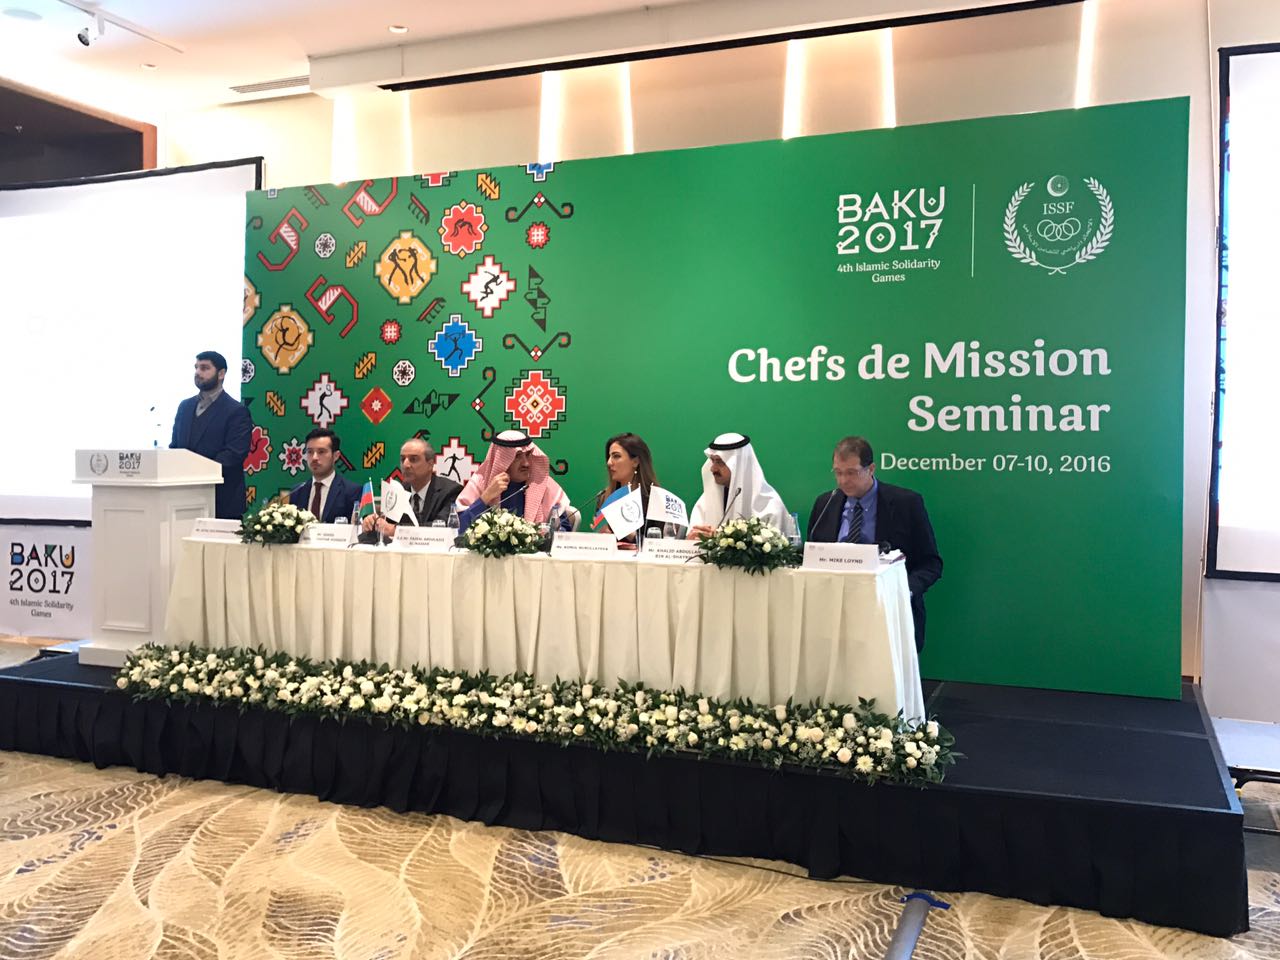  Baku 2017 Welcomes Chefs de Missions ahead of Islamic Solidarity Games